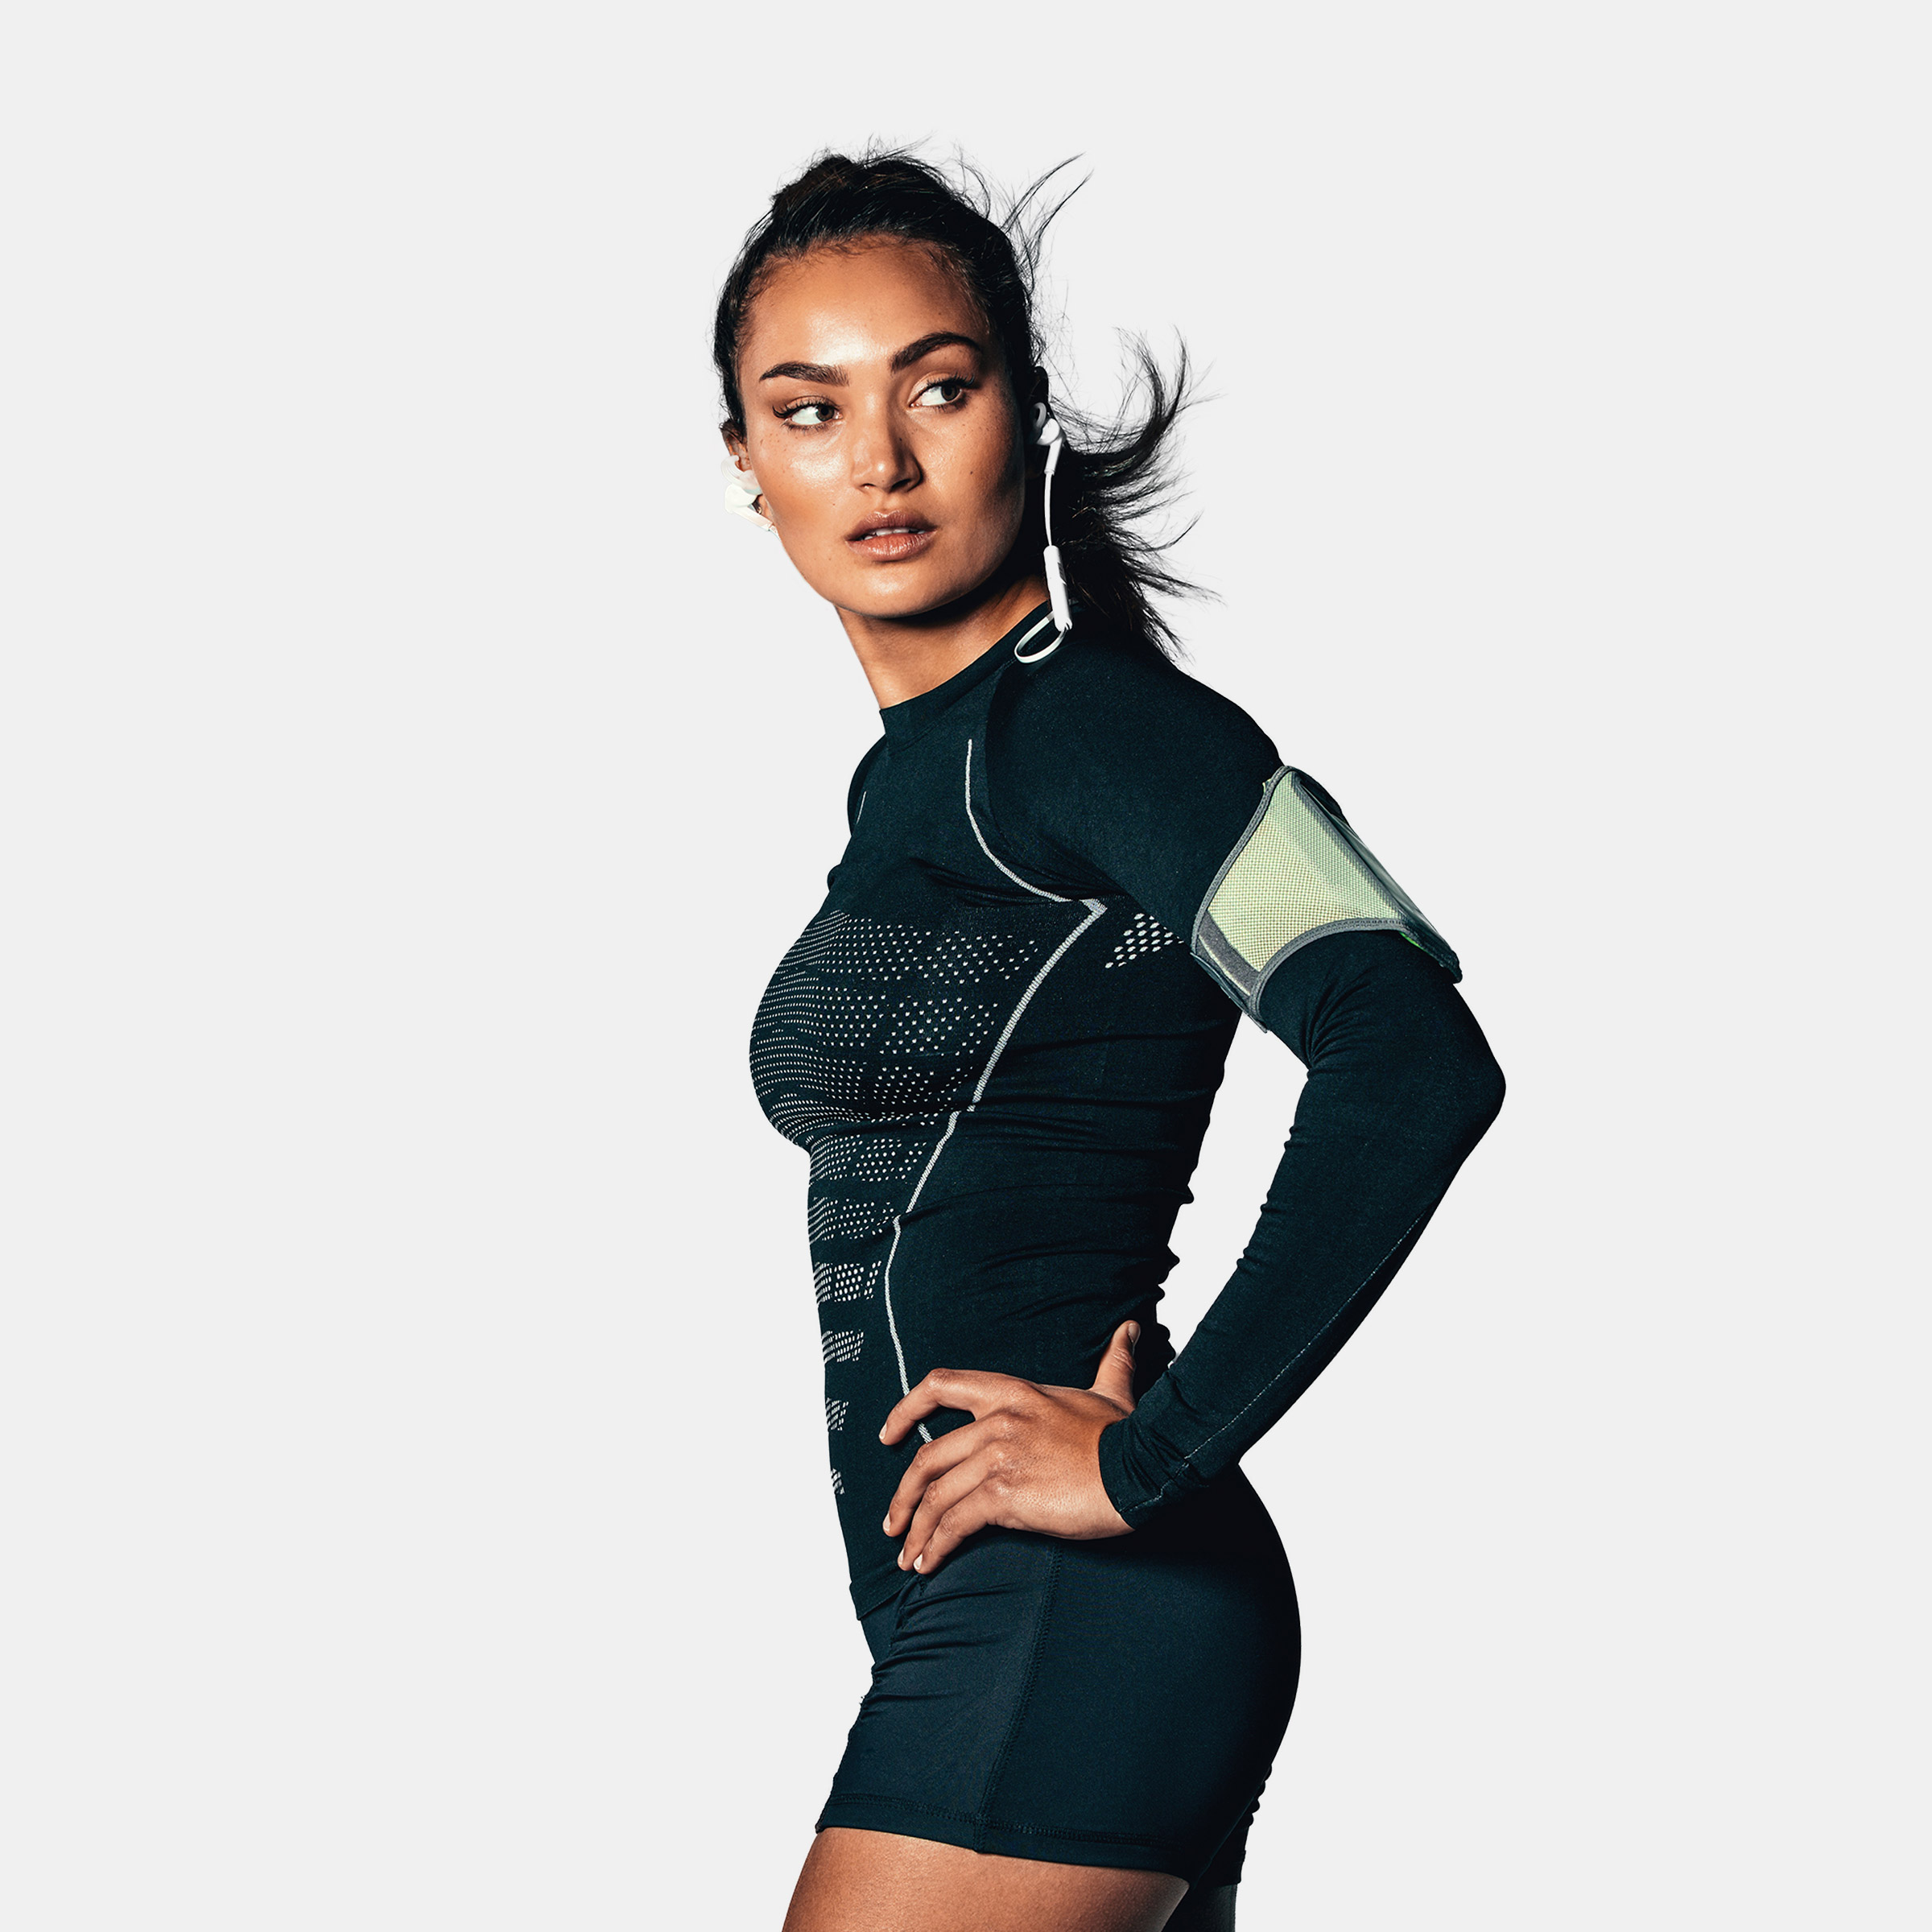 Athletic woman wearing headphones, looking over her shoulder, hands on her hips